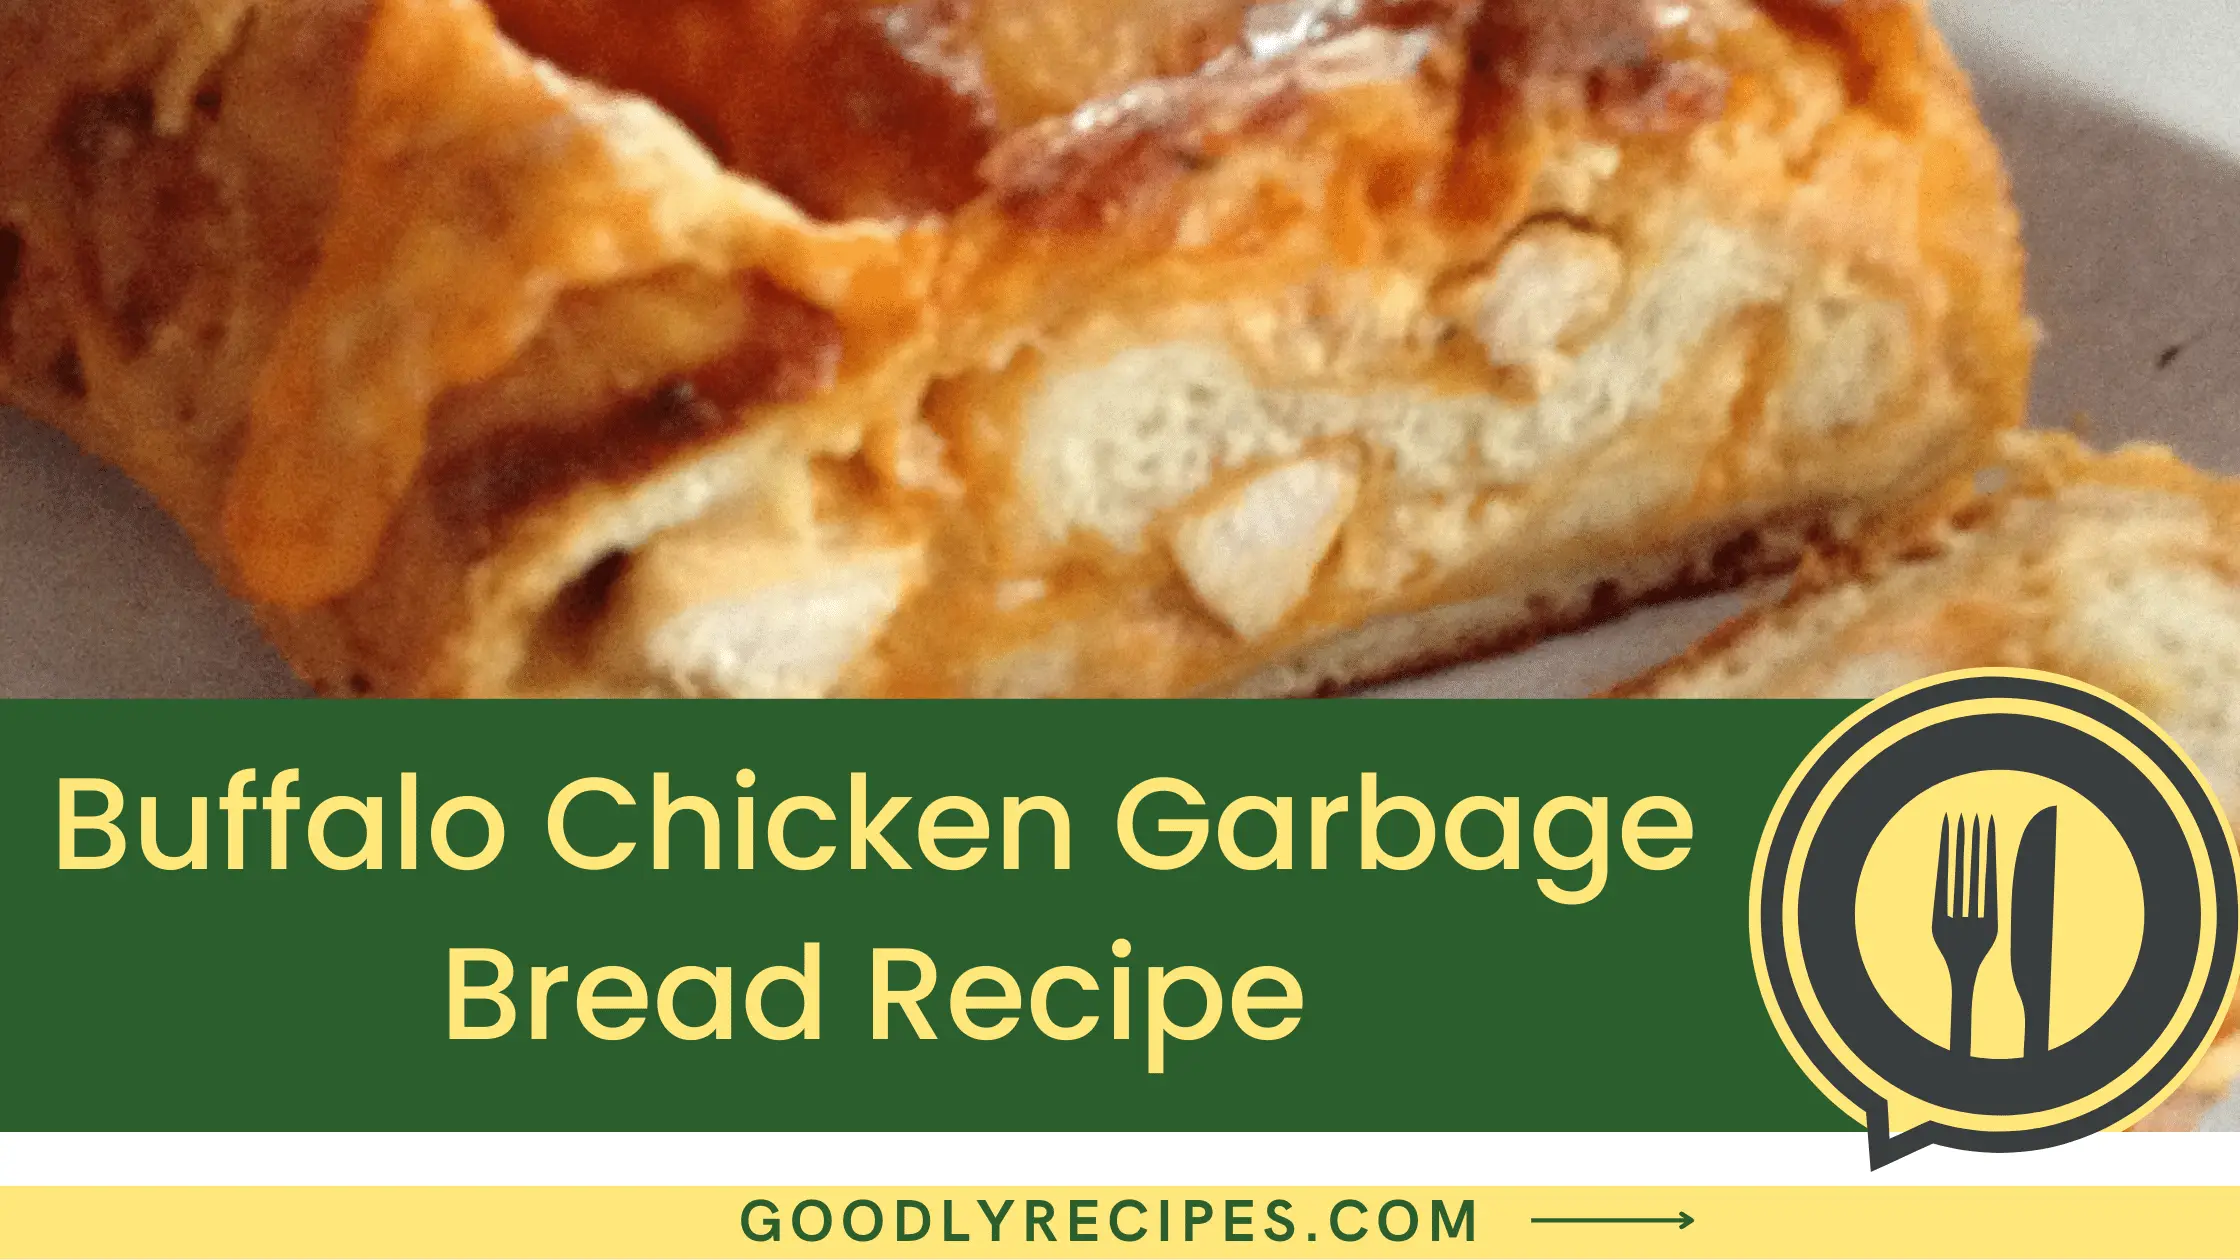 Buffalo Chicken Garbage Bread Recipe